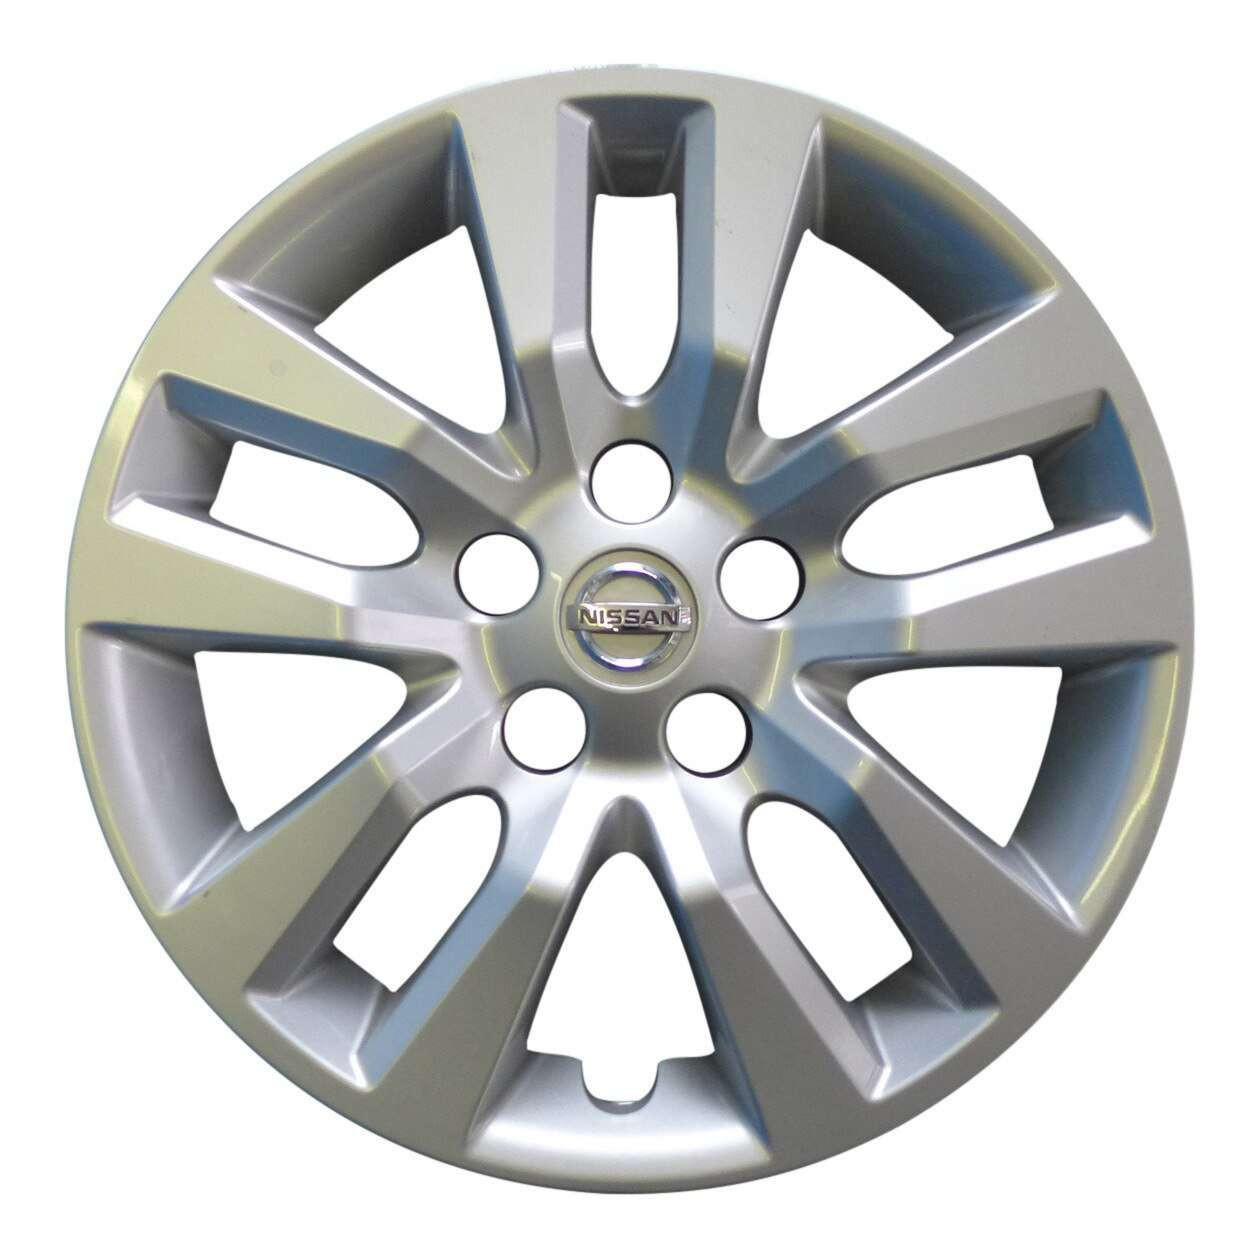 2013-2018 Nissan Altima Hubcap / Wheel Cover 16" 53088 #403153TM0B: A Comprehensive Guide